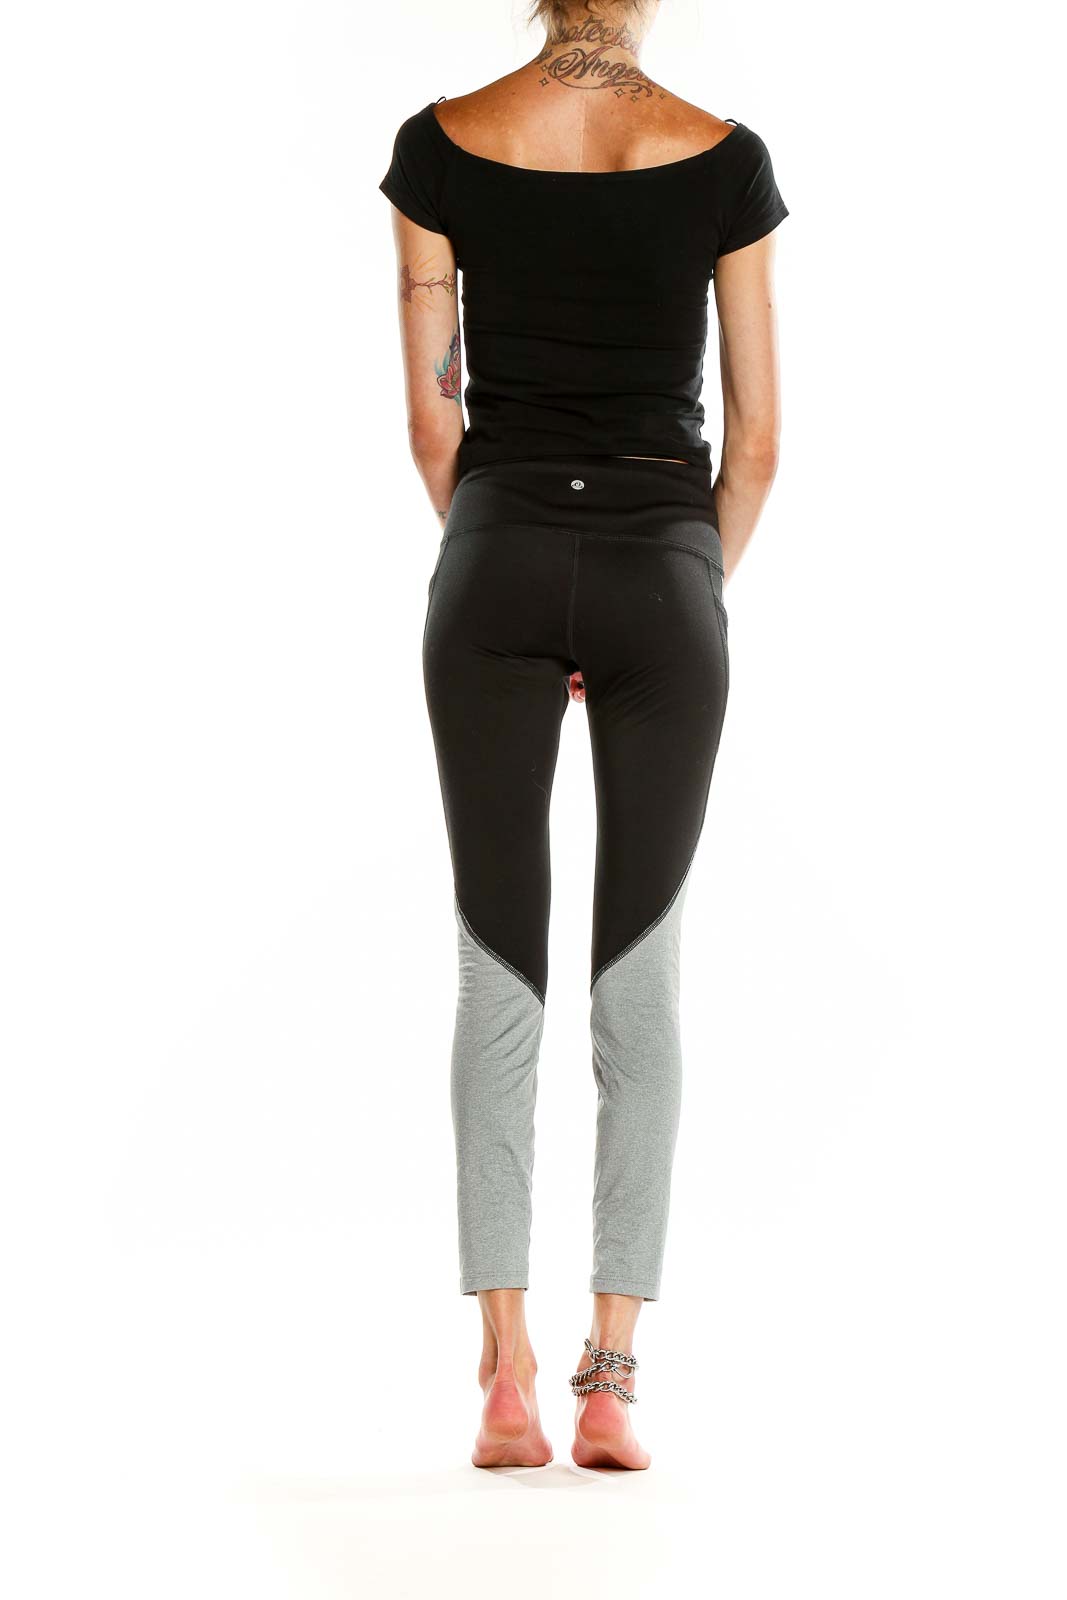 apana - Gray Black Colorblock Activewear Leggings Polyester Spandex